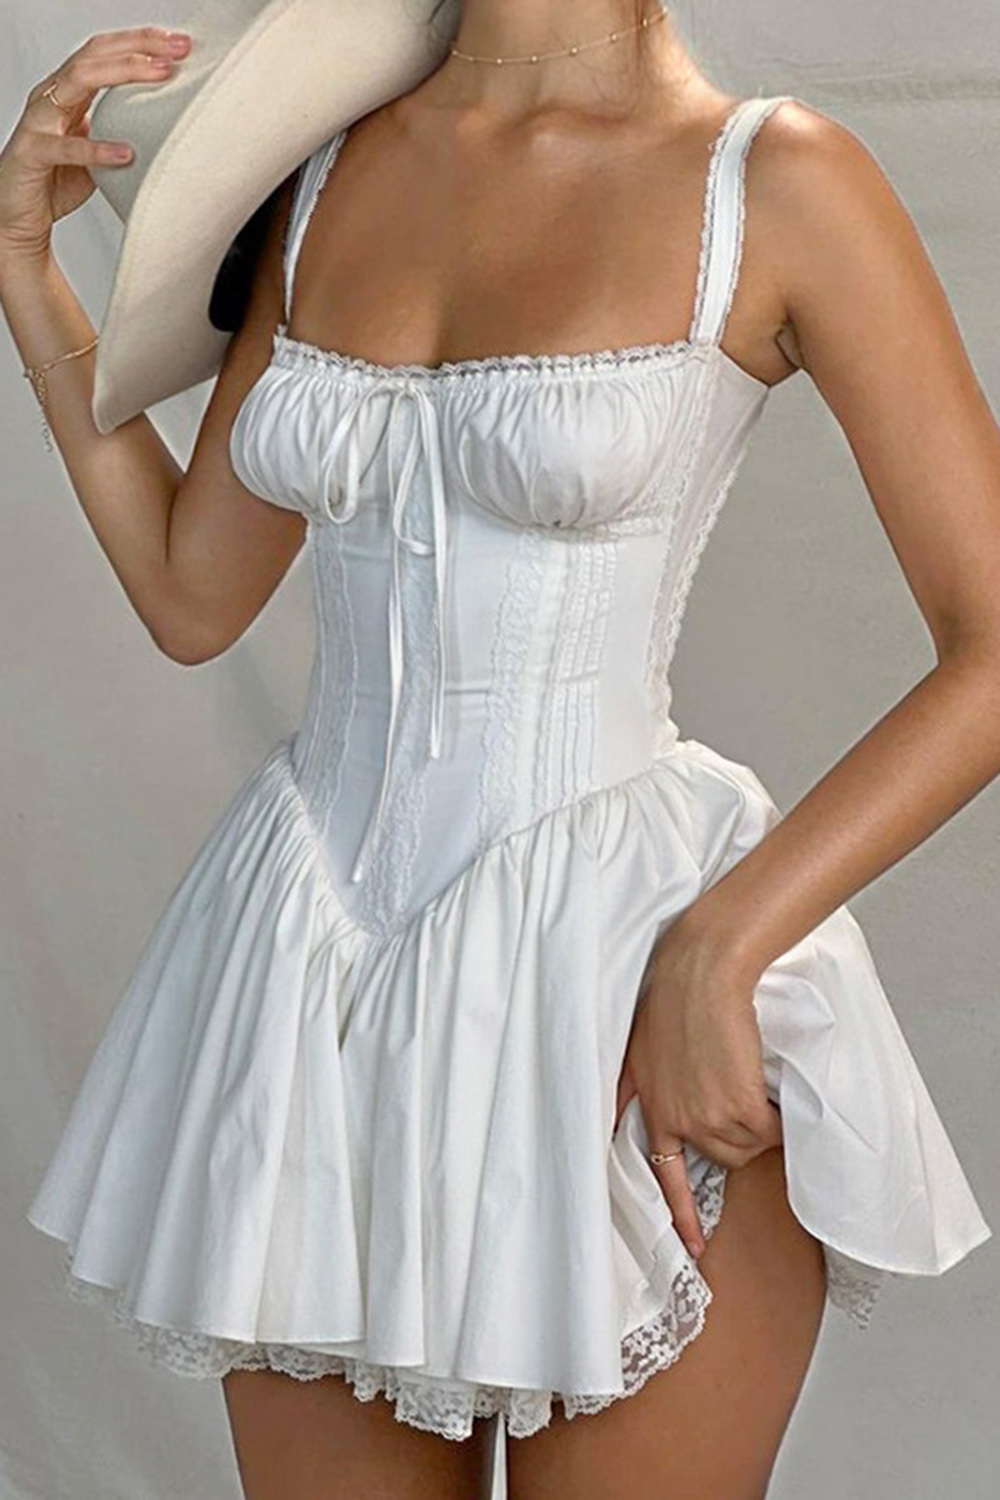 Charming A-Line Straps Mini White Graduation Dress